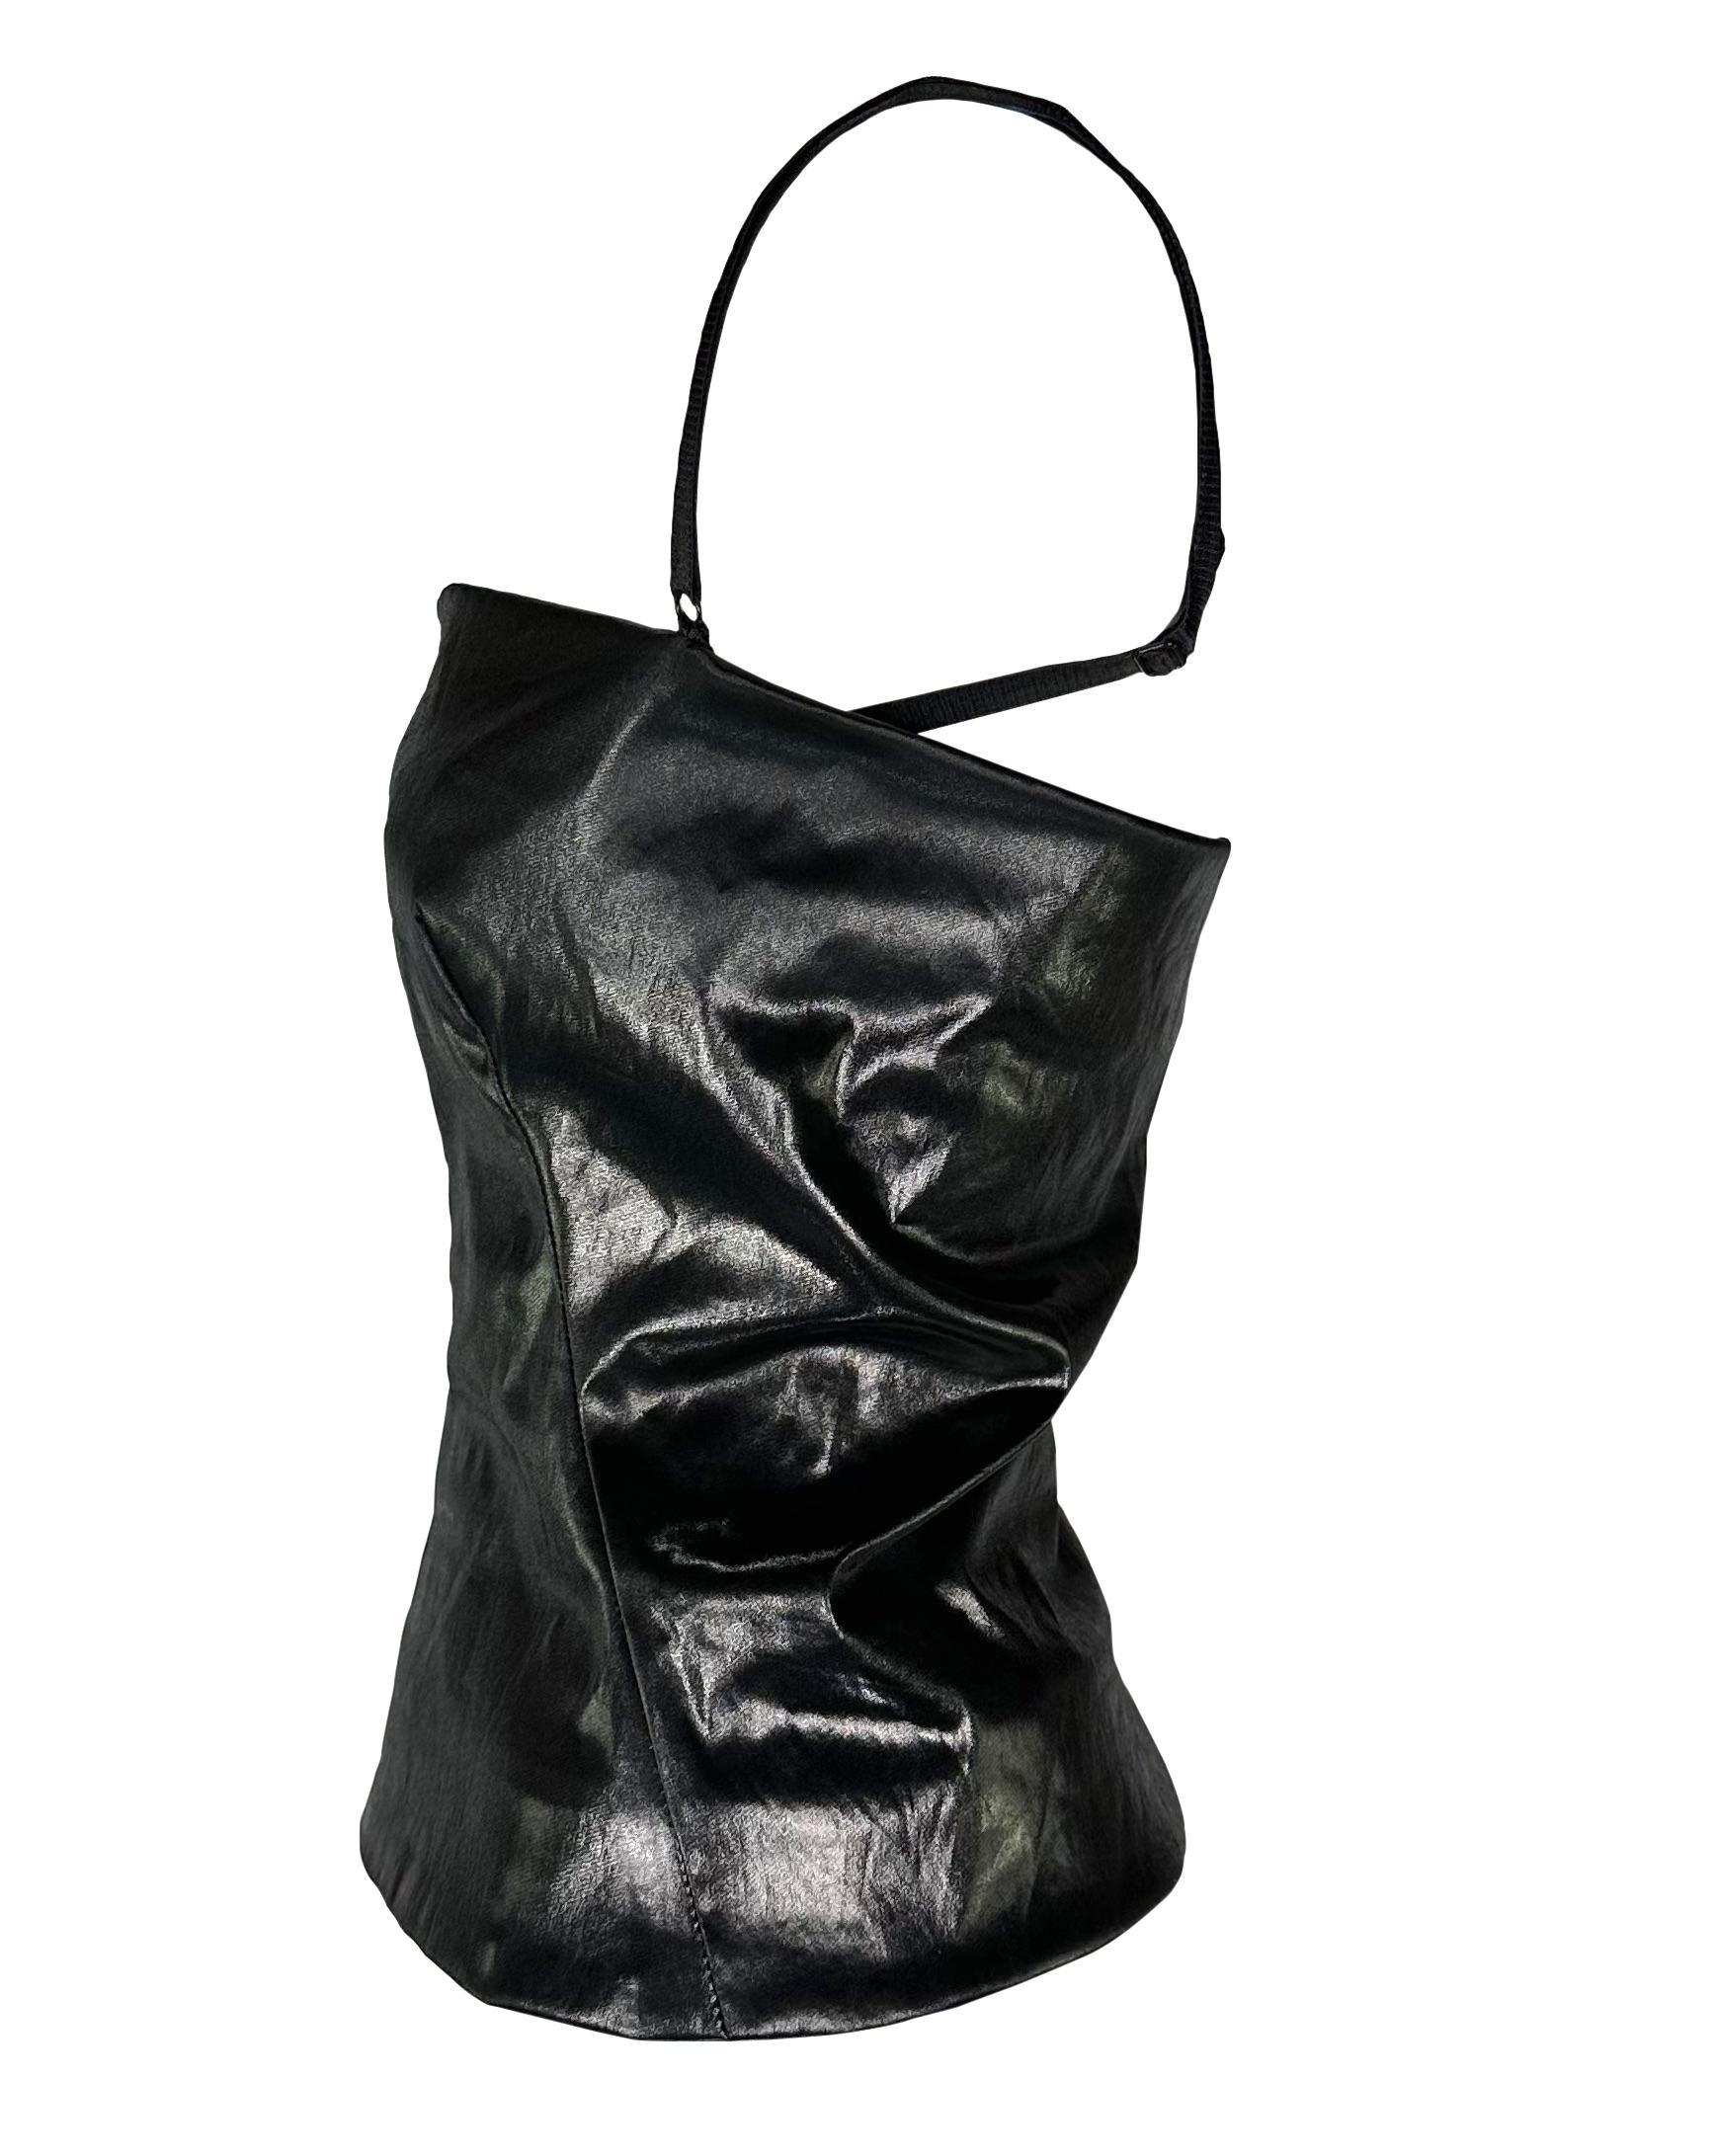 Women's S/S 1999 Dolce & Gabbana Runway Wet Look Black Stretch Bustier Bra Crop Top For Sale